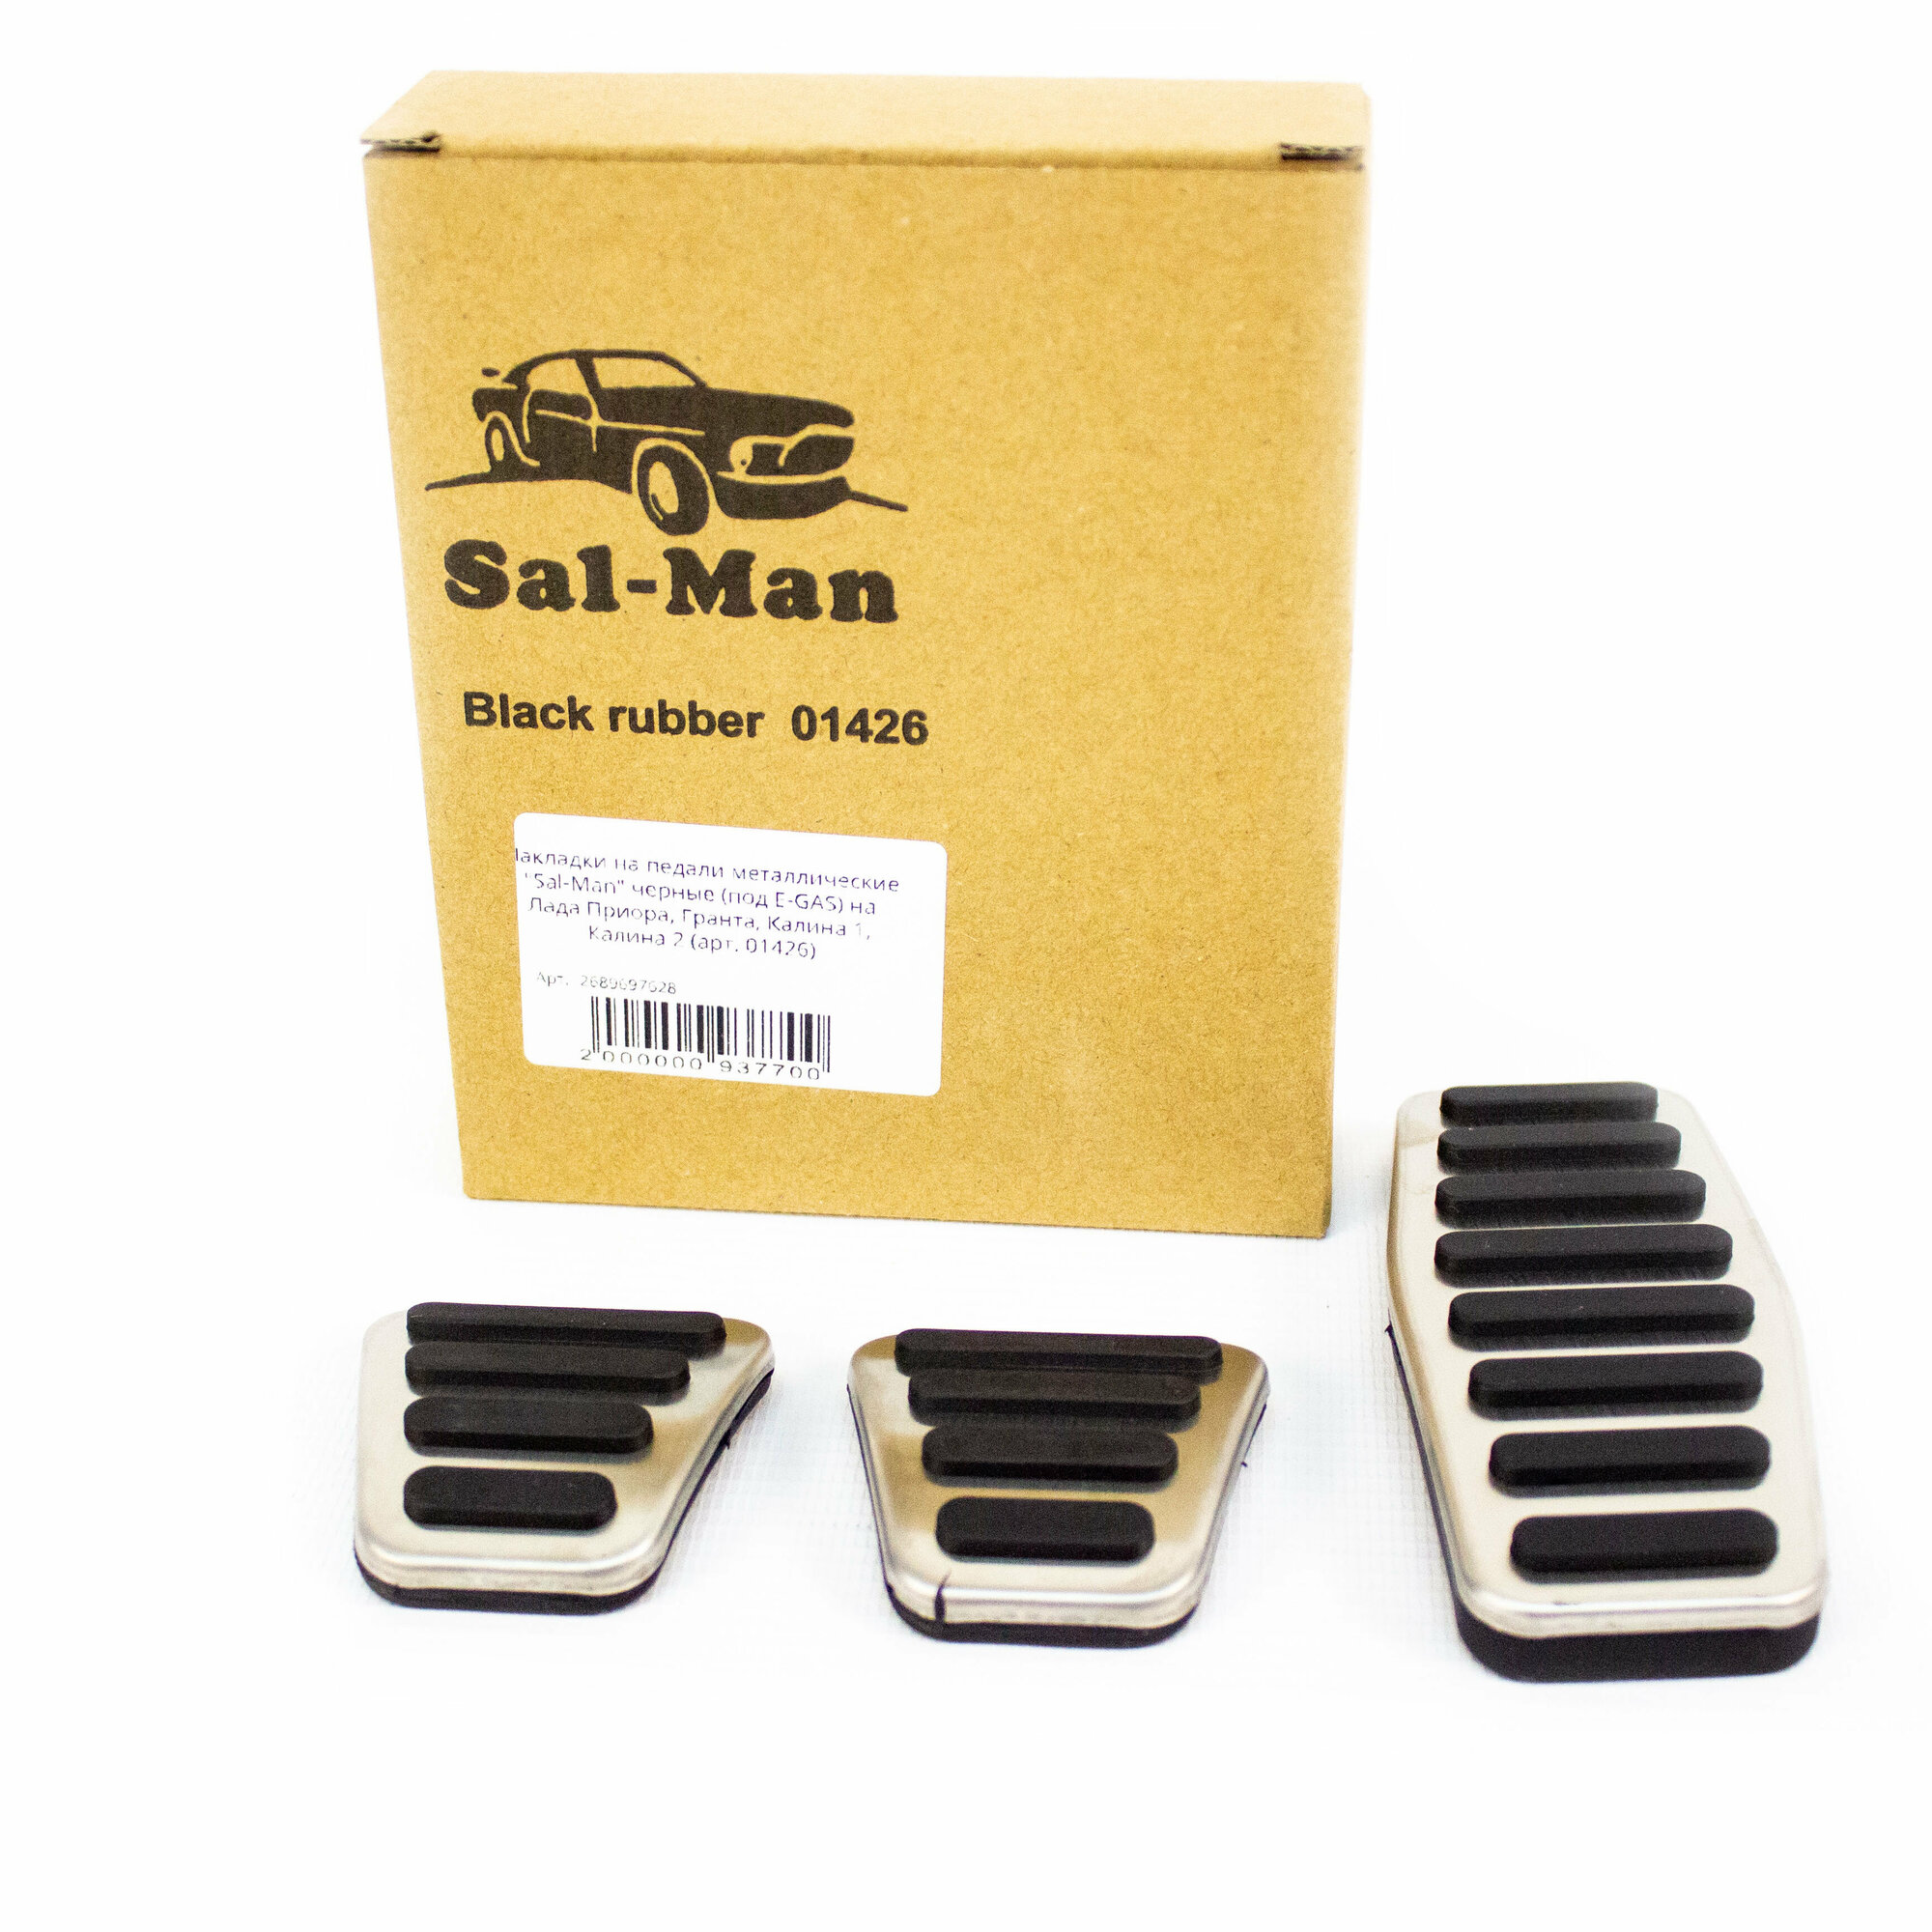 Накладки на педали металлические "Sal-Man" черные (под E-GAS) на Лада Приора, Гранта, Калина 1, Калина 2